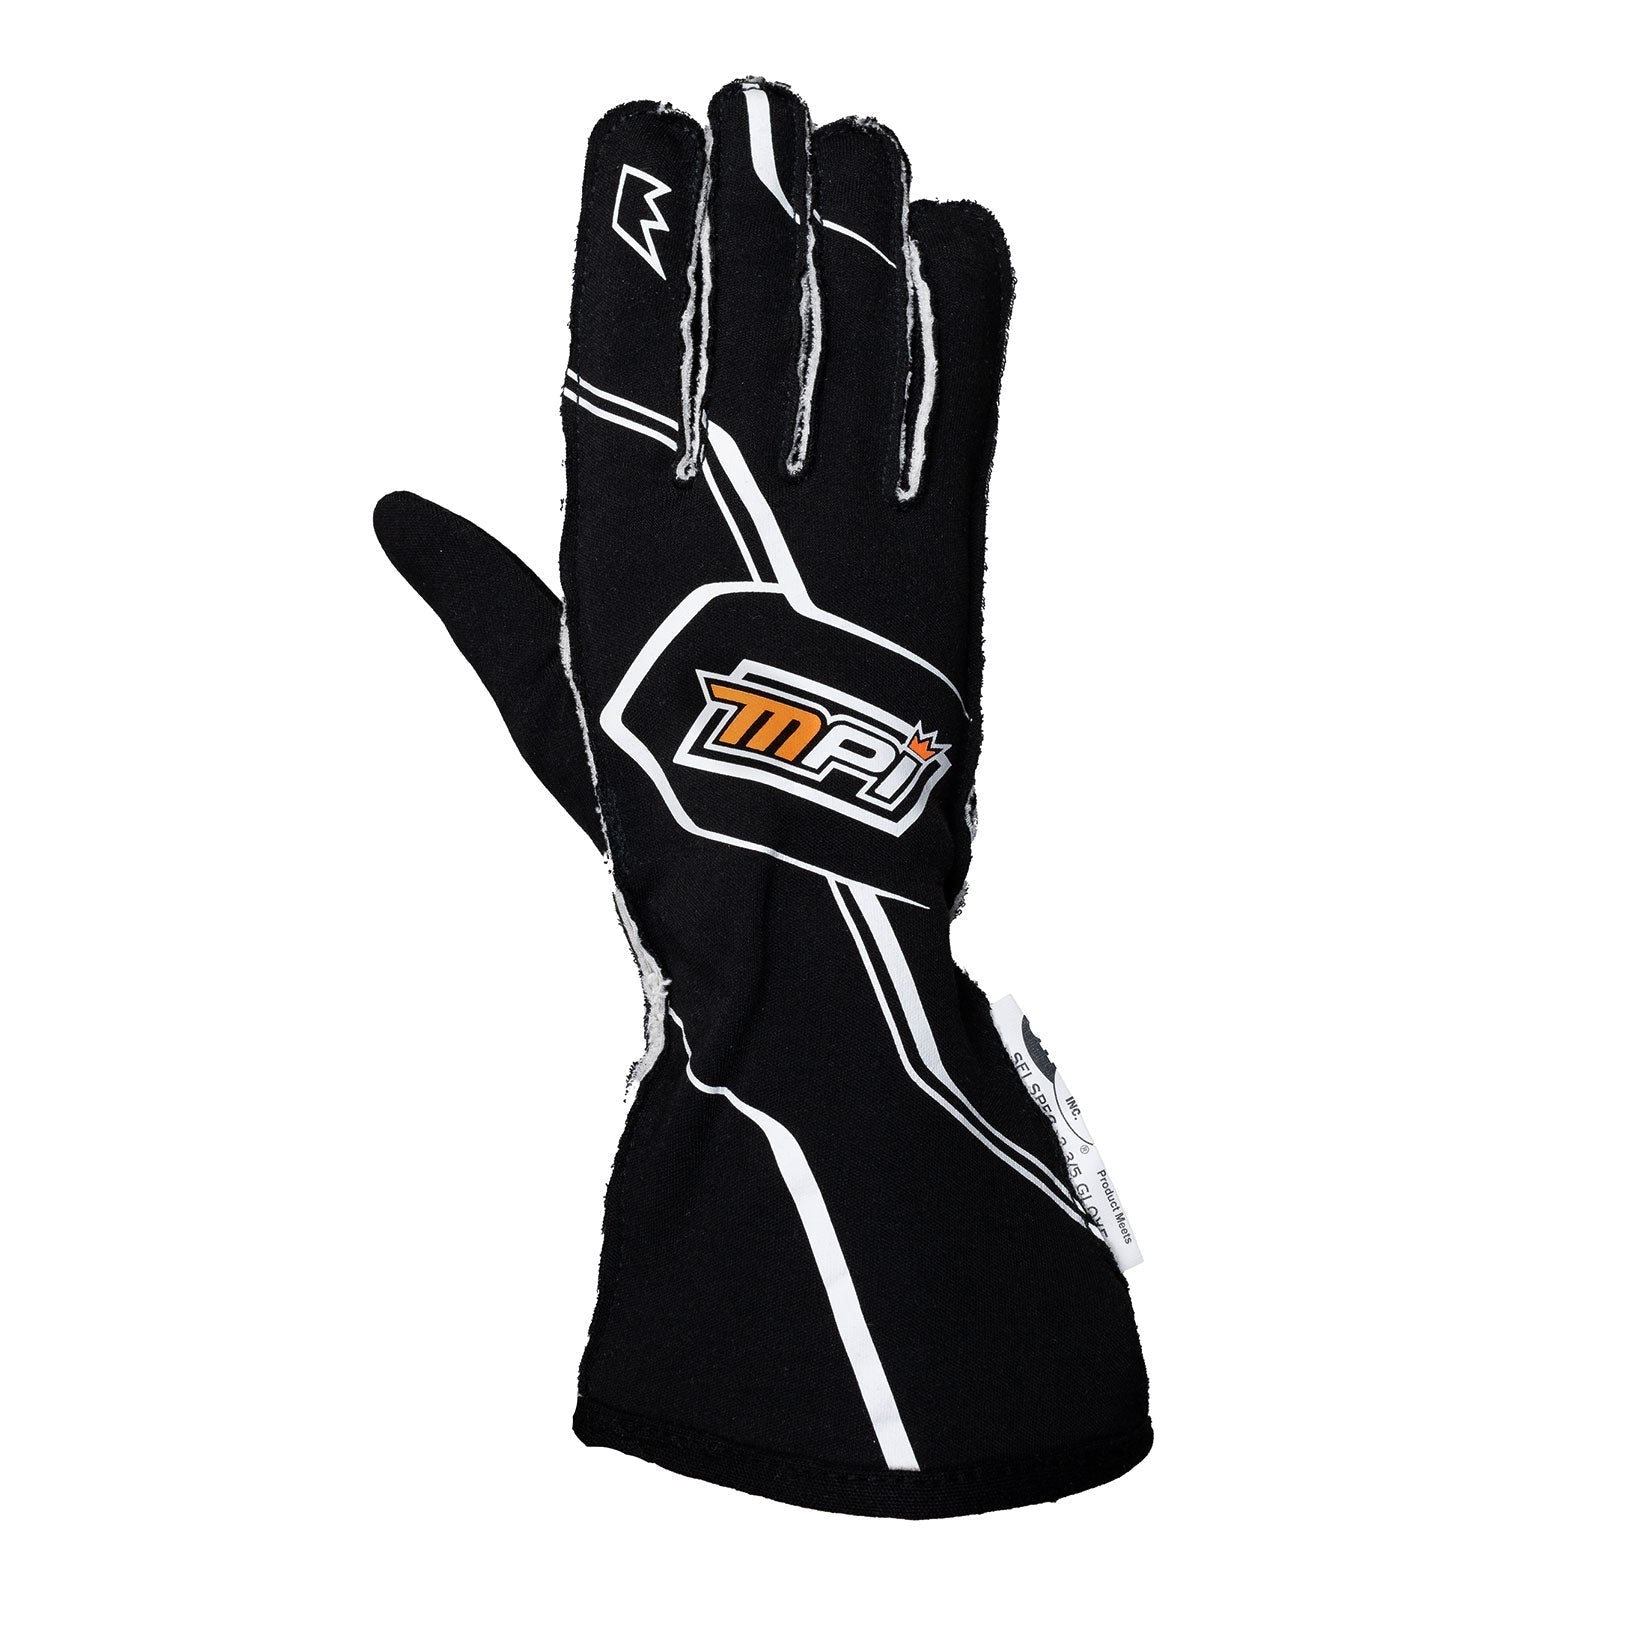 Max Papis Innovations Racing Gloves Black L MPI display